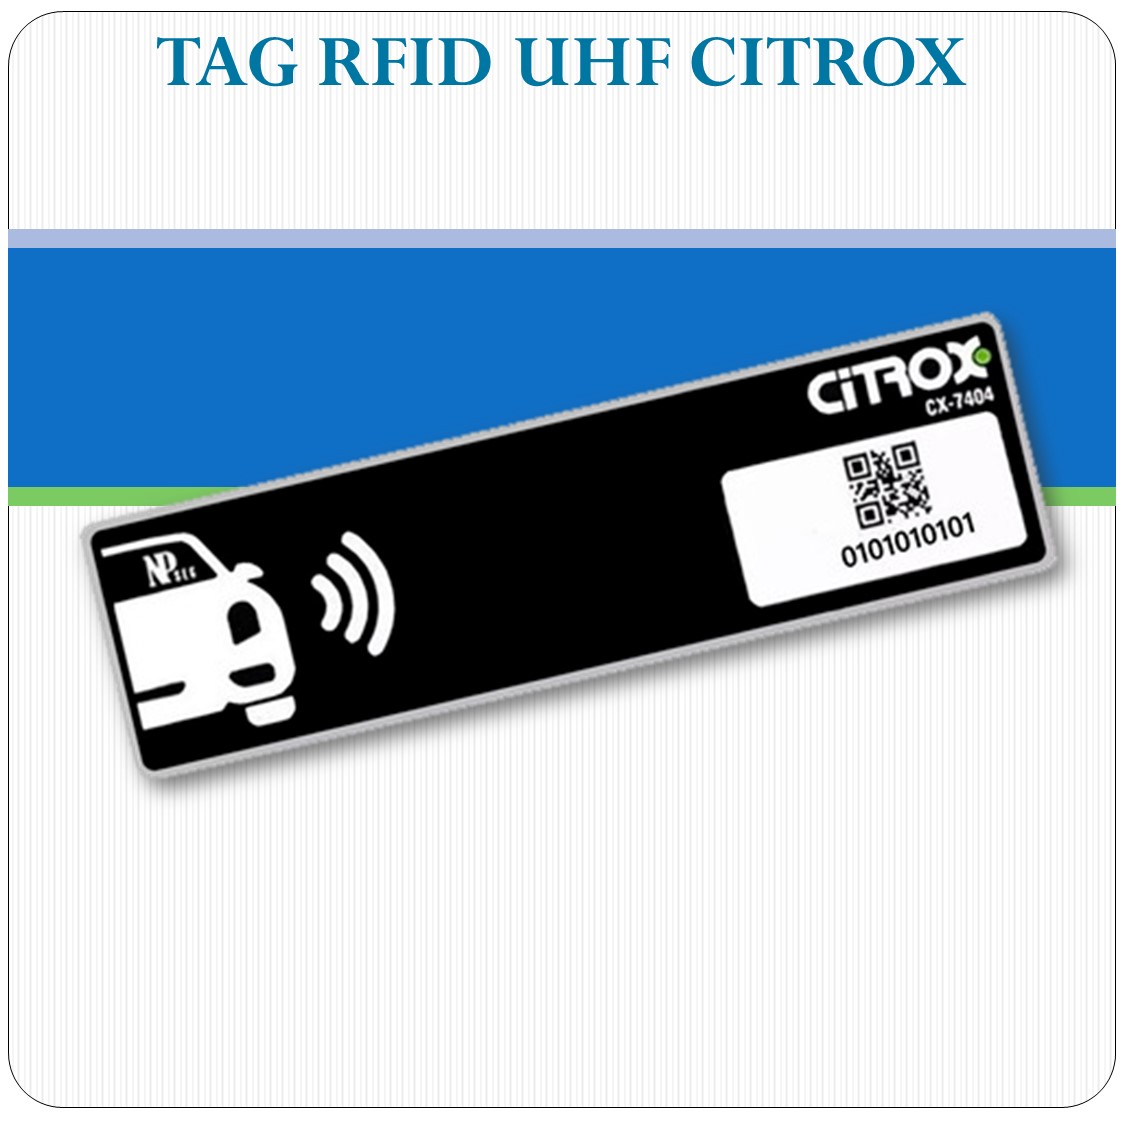 Tag Etiqueta RFID UHF Veicular - CITROX